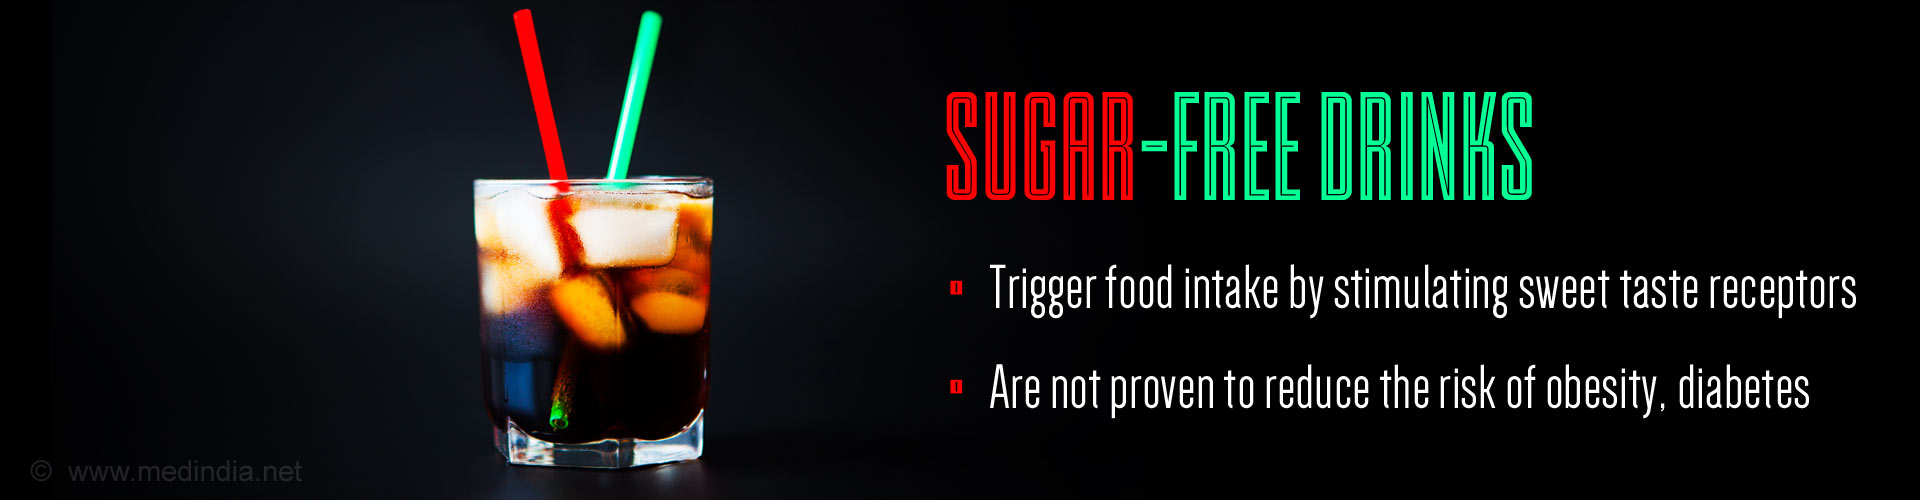 Sugar-Free Drinks Are No Better Than Full Sugar Drinks